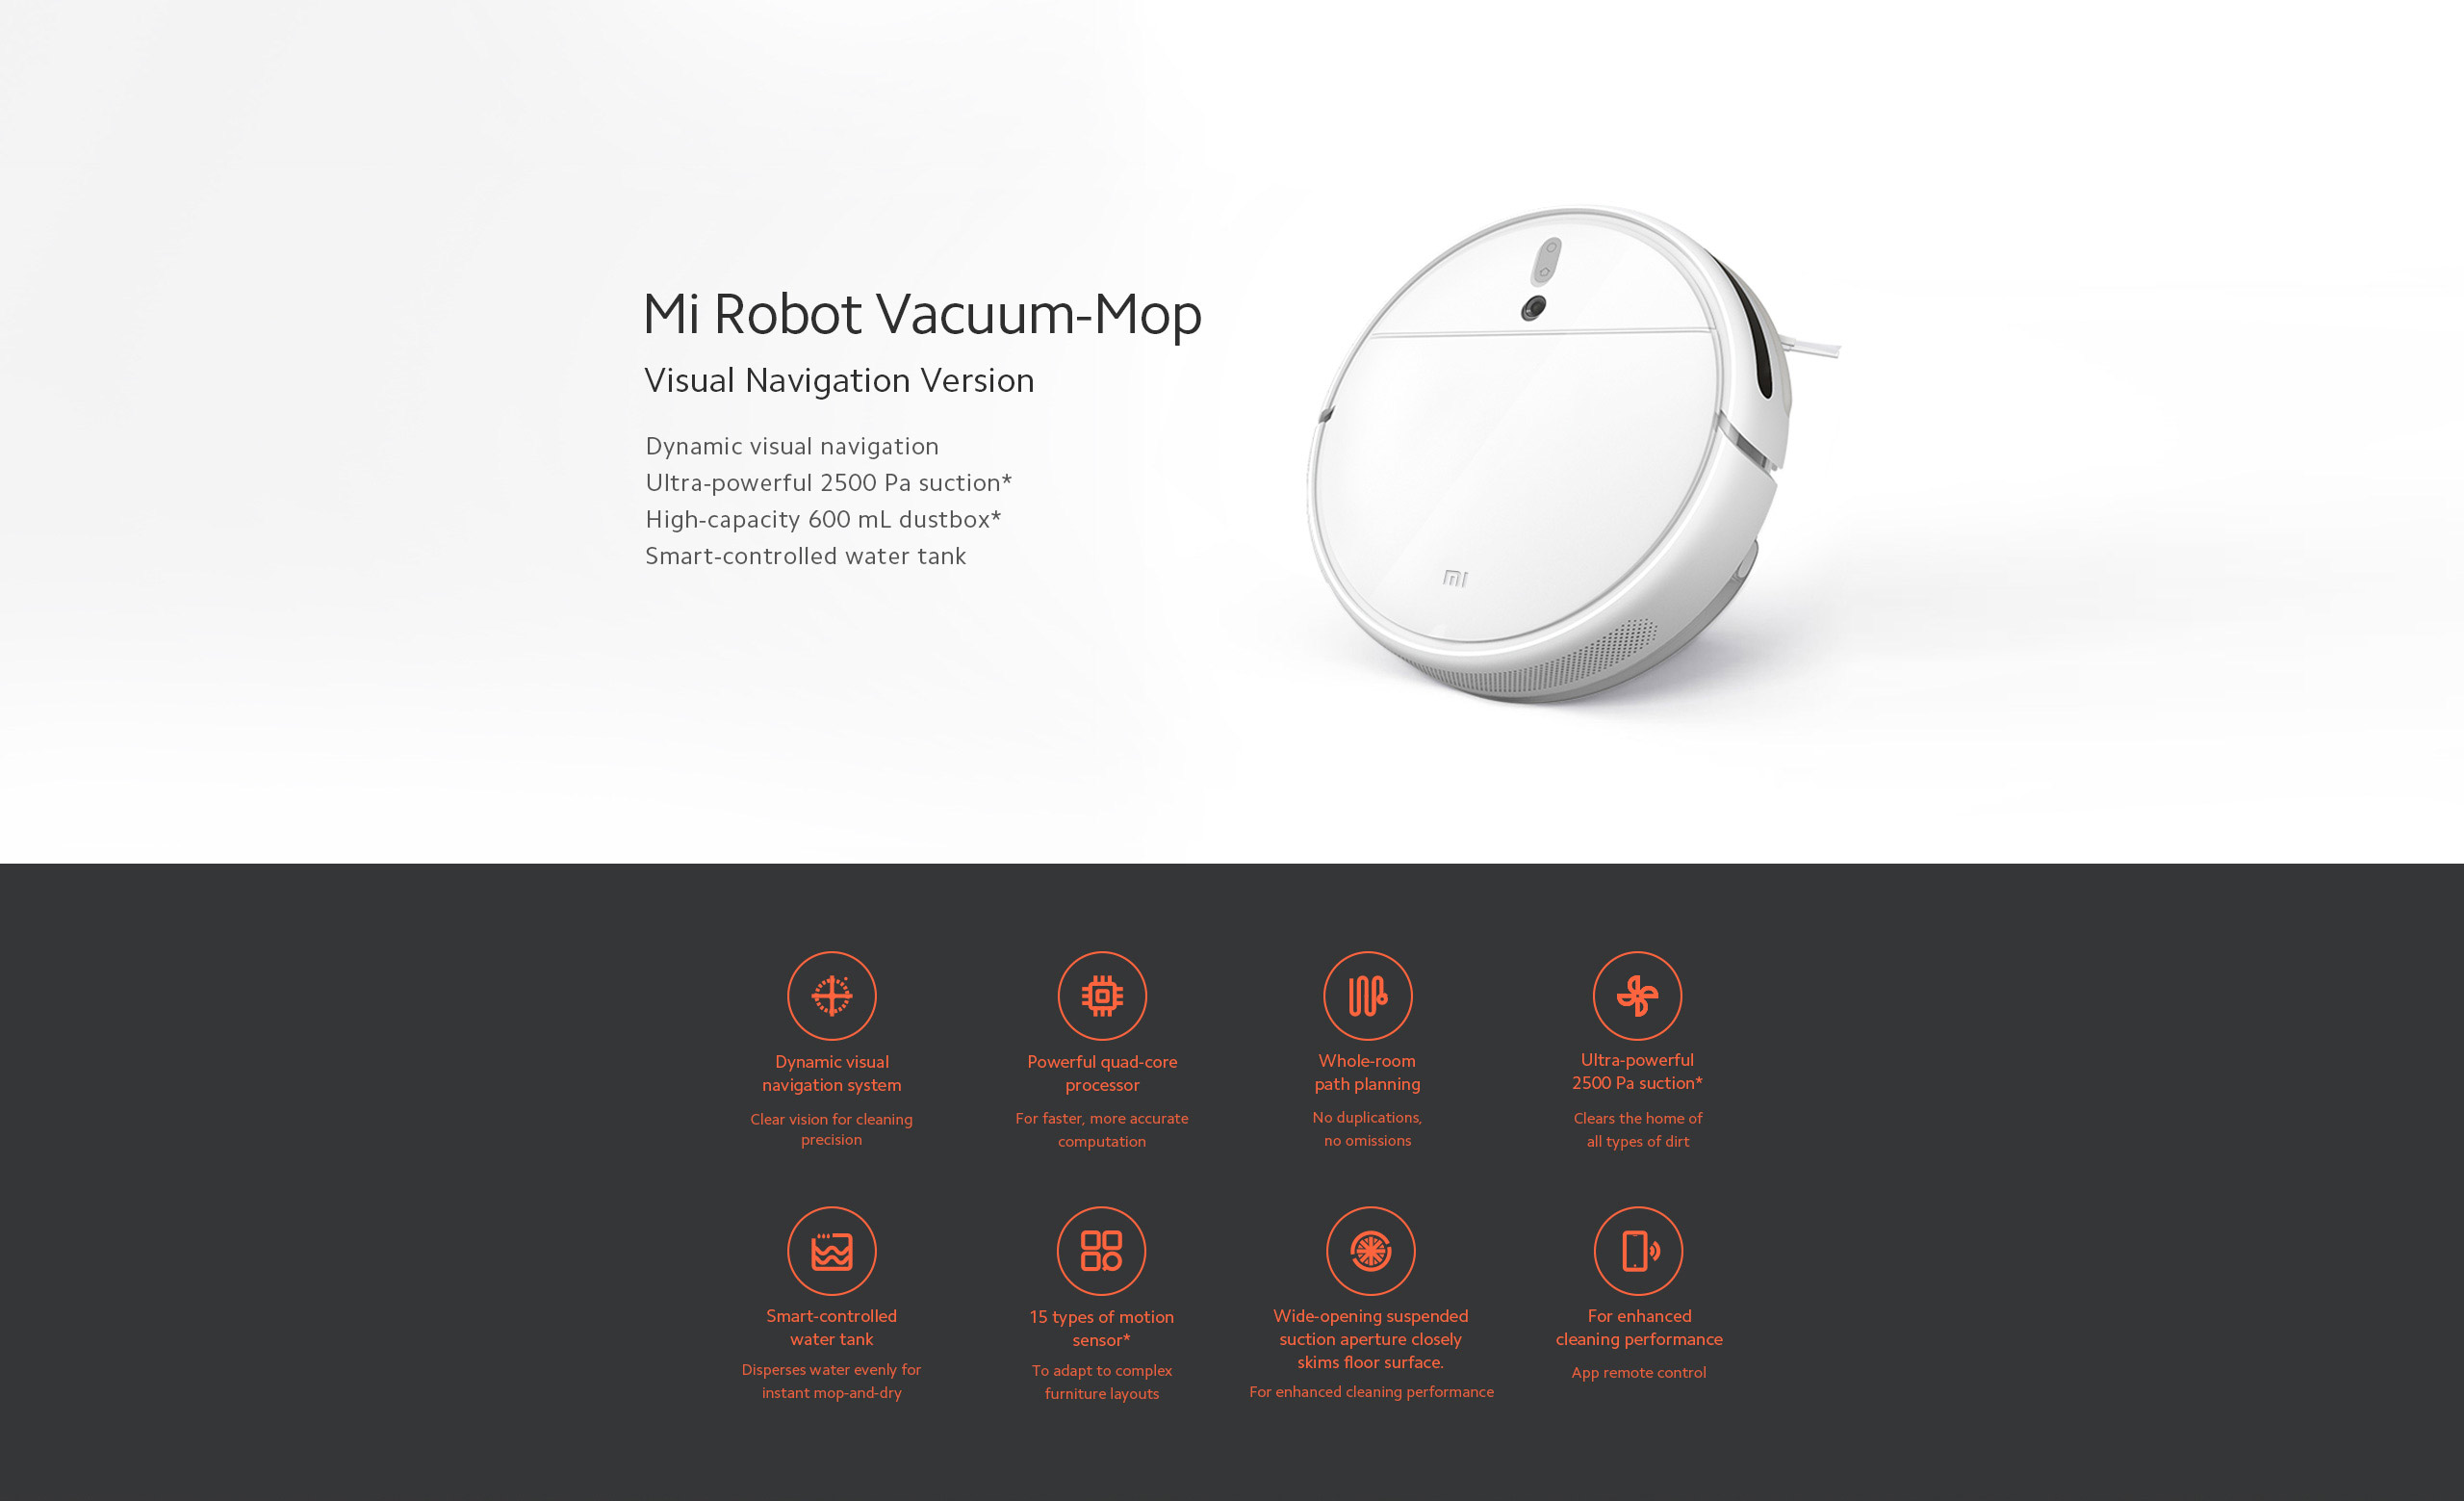 Xiaomi Mi Robot Vacuum Русификация